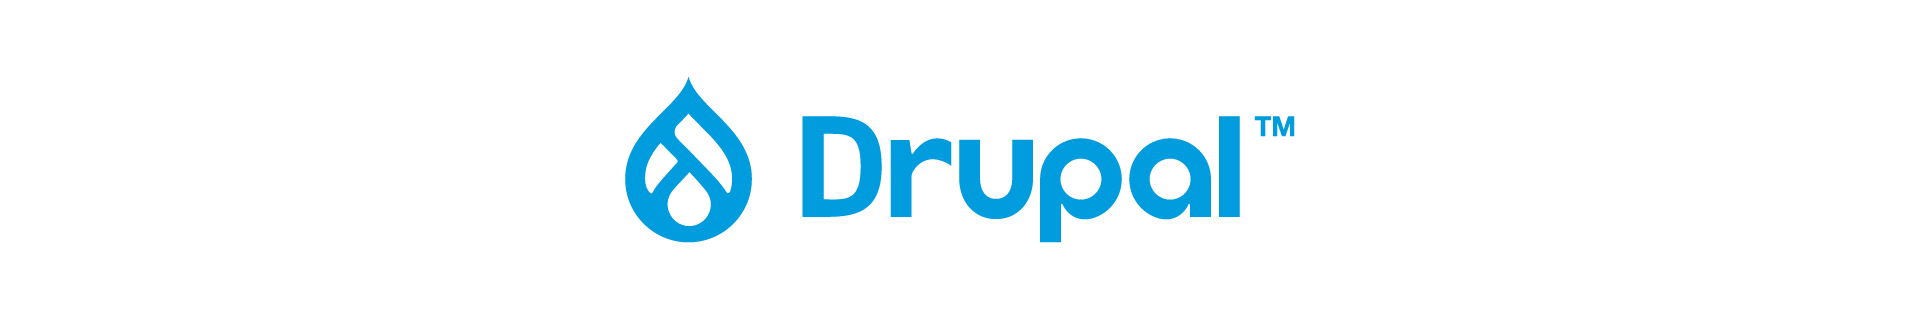 Drupal wordmark